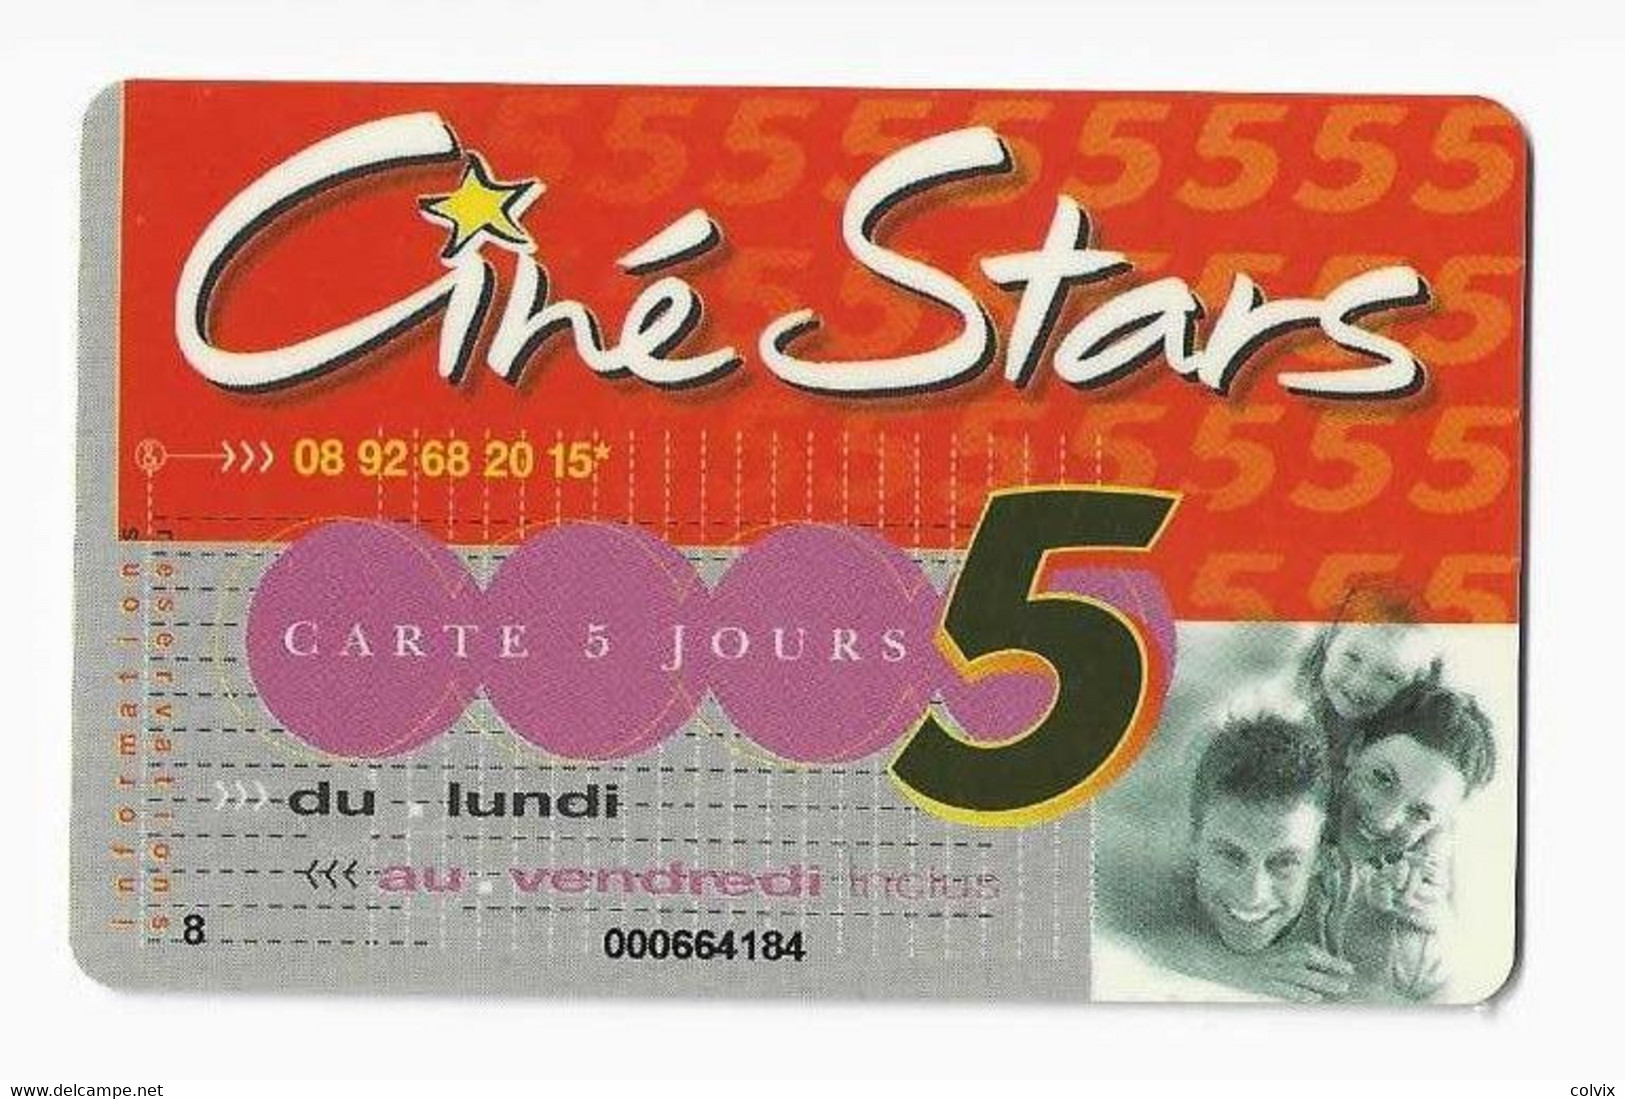 FRANCE CARTE CINEMA CINE STARS 5 JOURS - Entradas De Cine